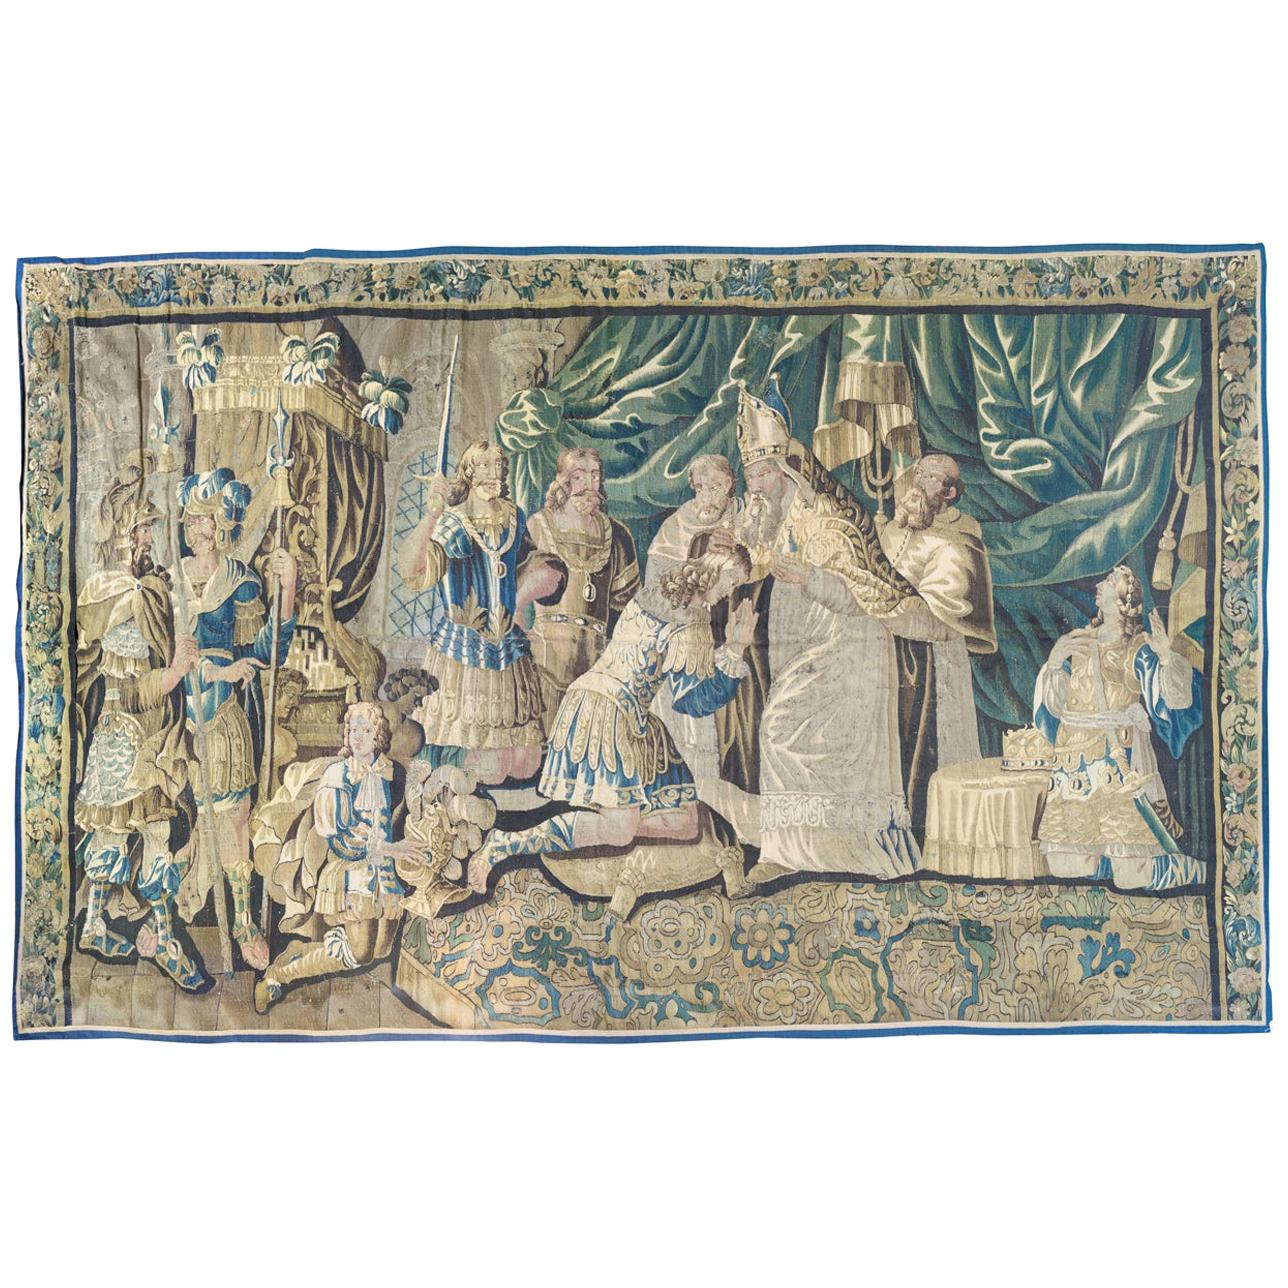 Large Antique 17th Century Flemish Religious Tapestry